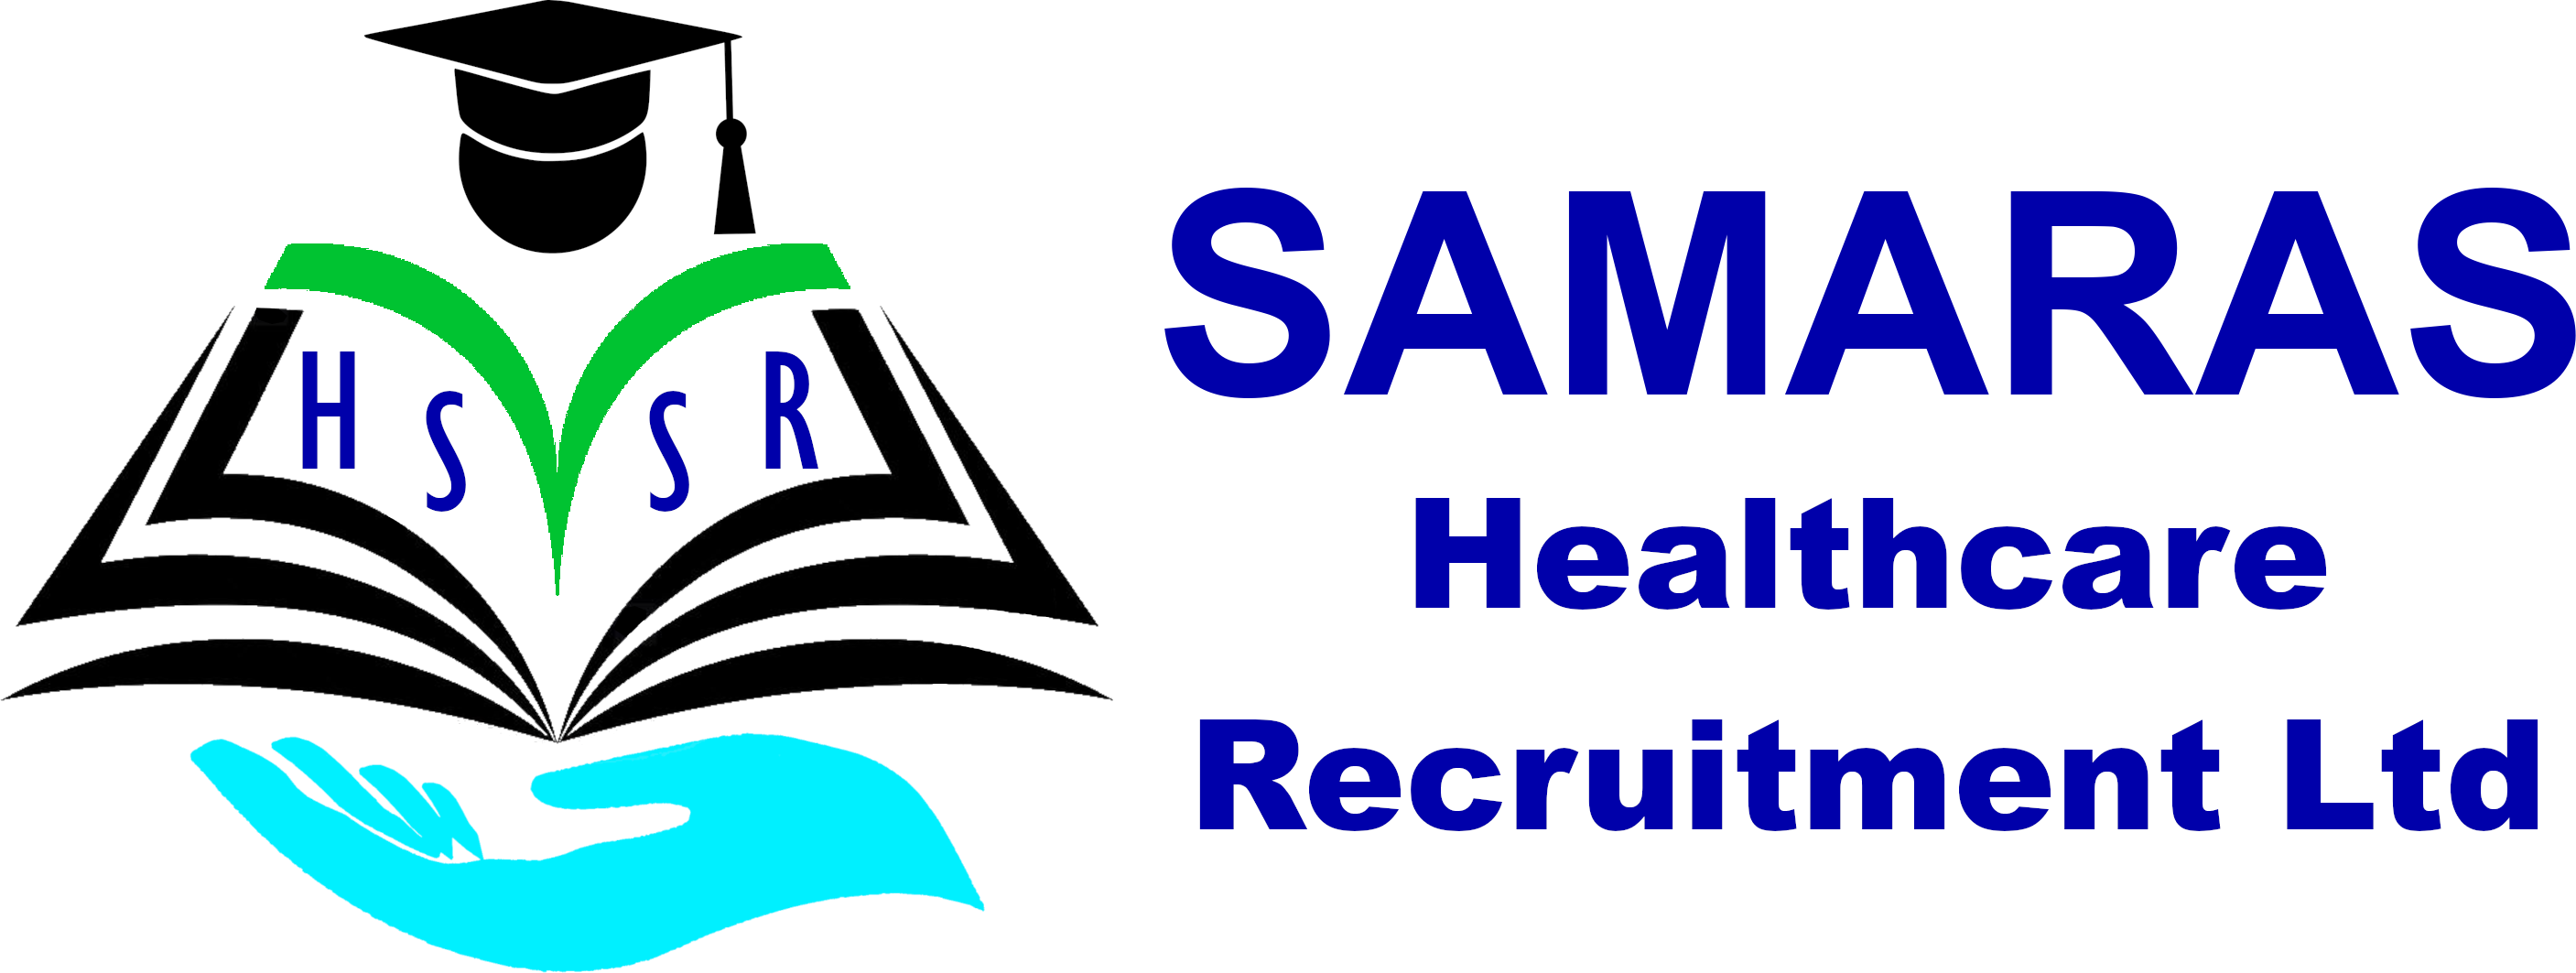 samaras healthcare recruitment ltd